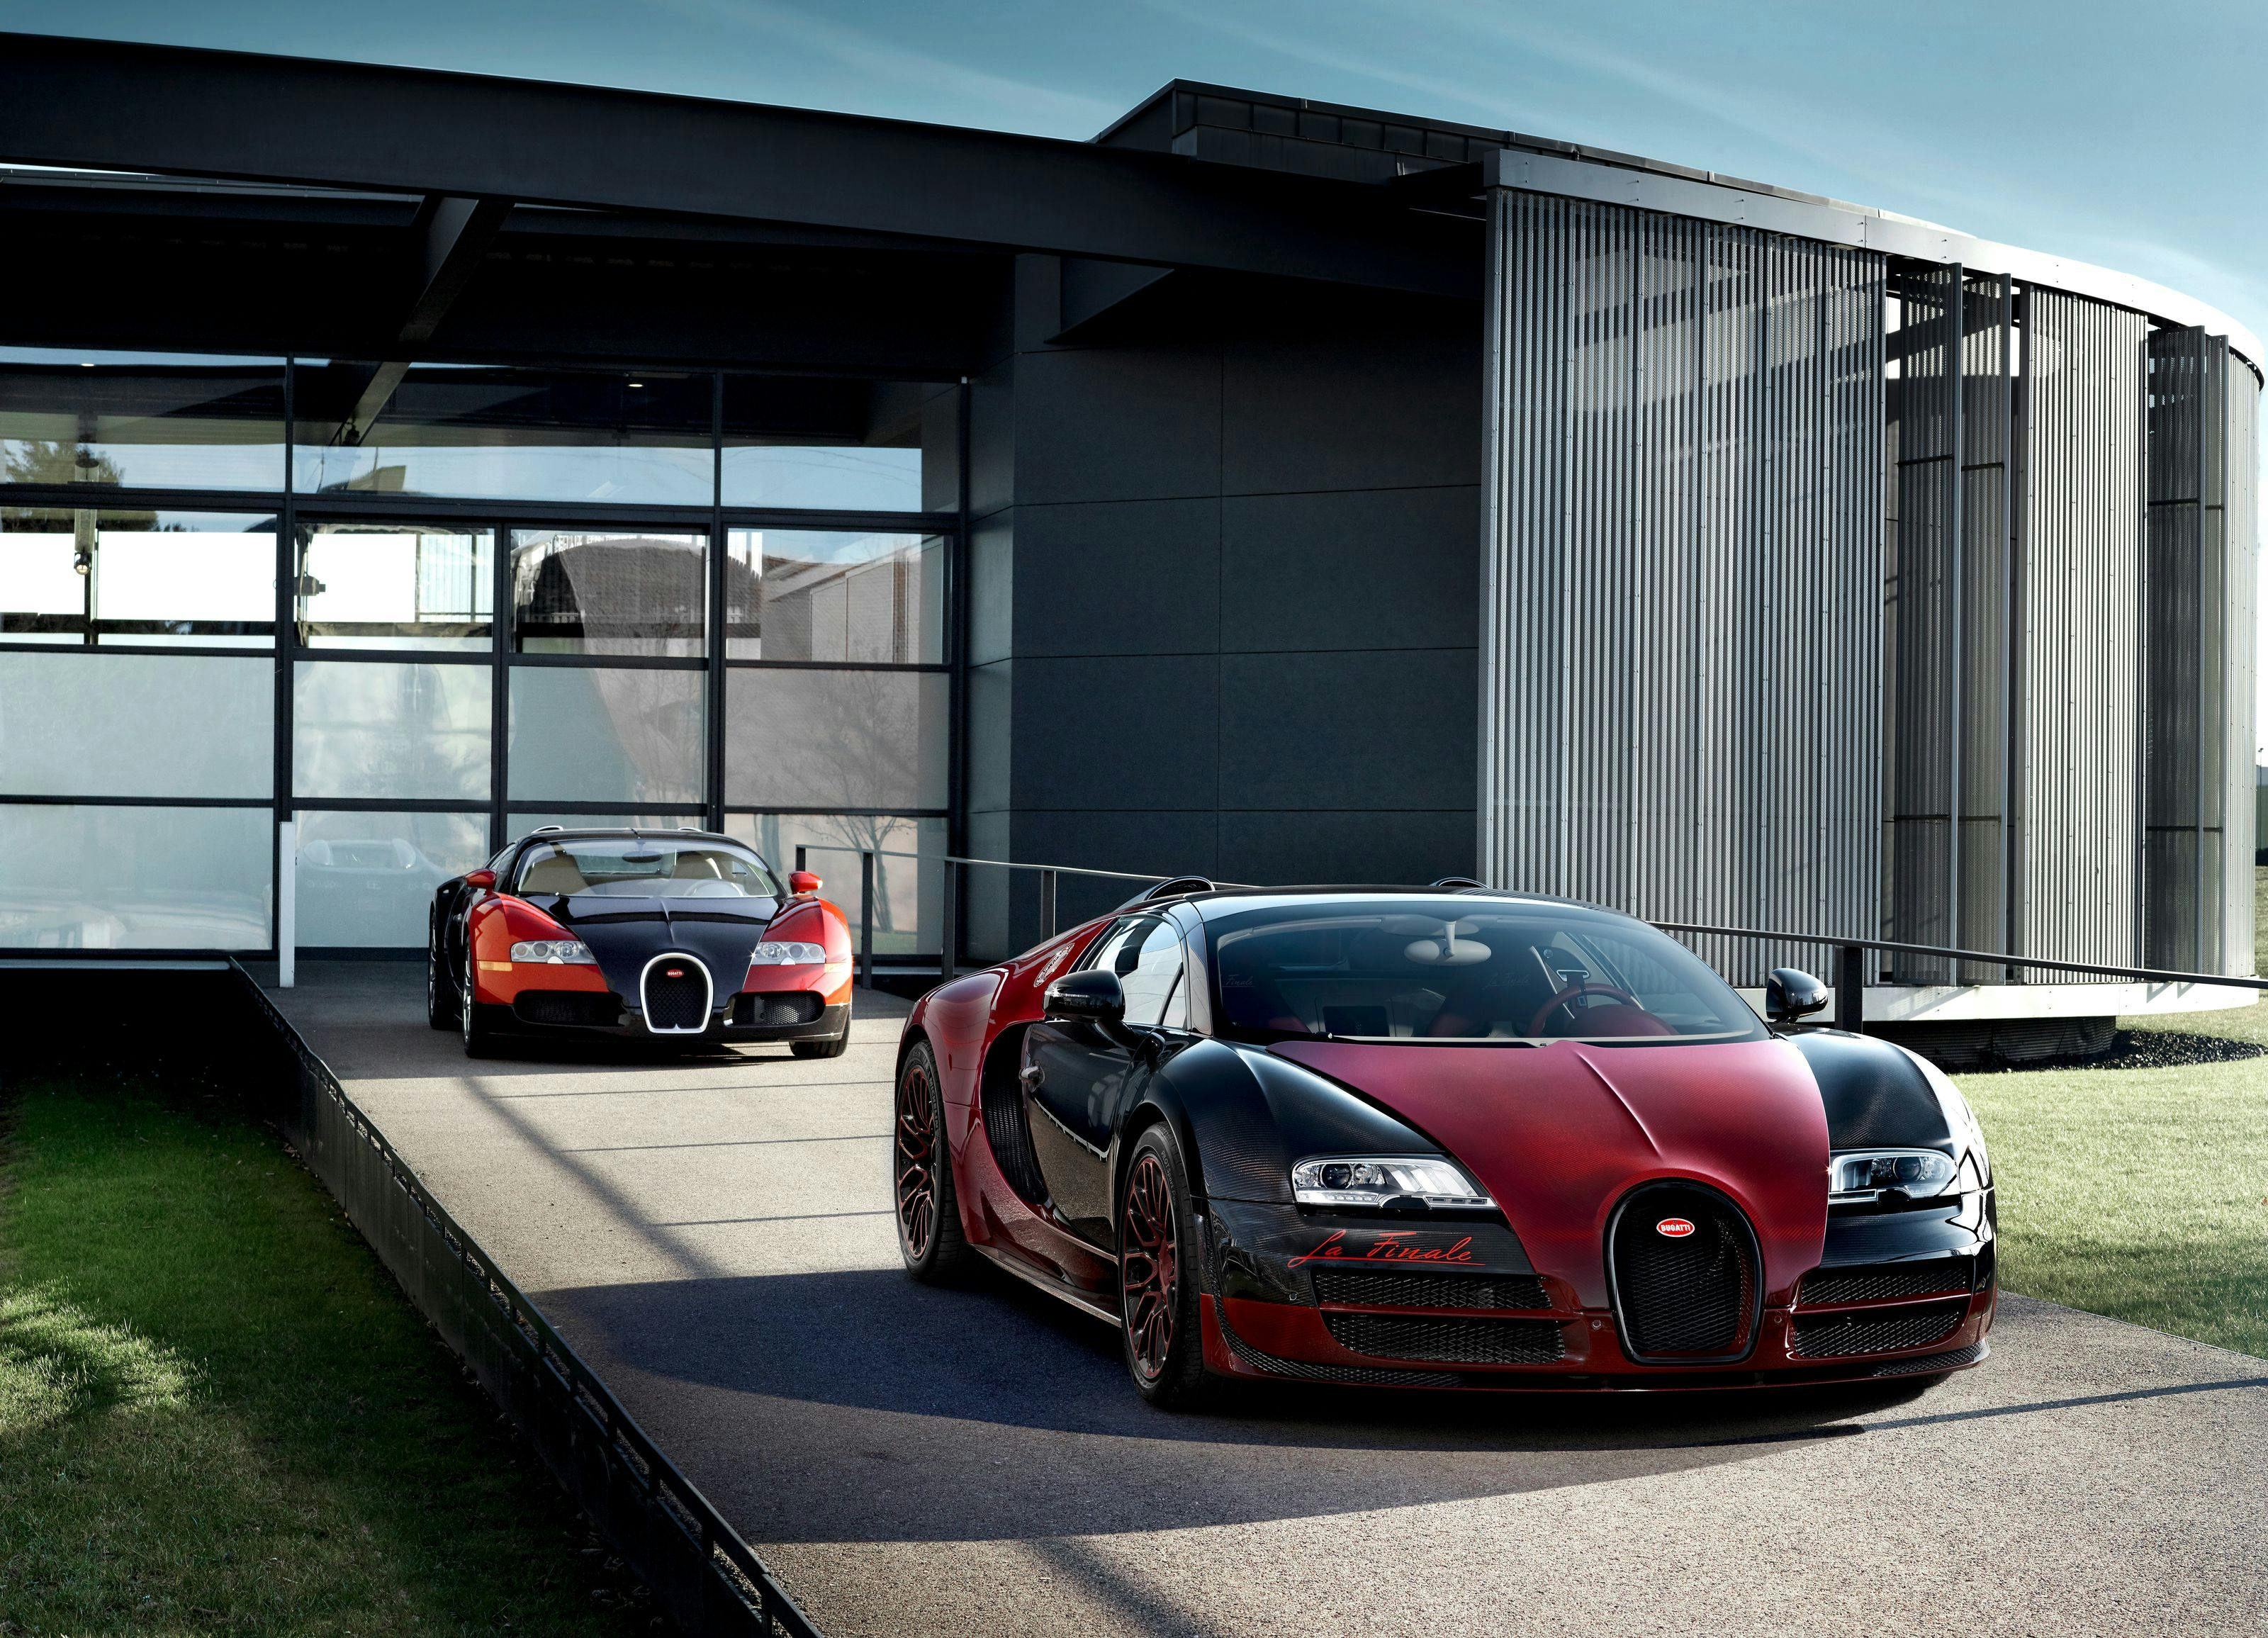 Geneva International Motor Show 2015: Bugatti celebrates the Veyron